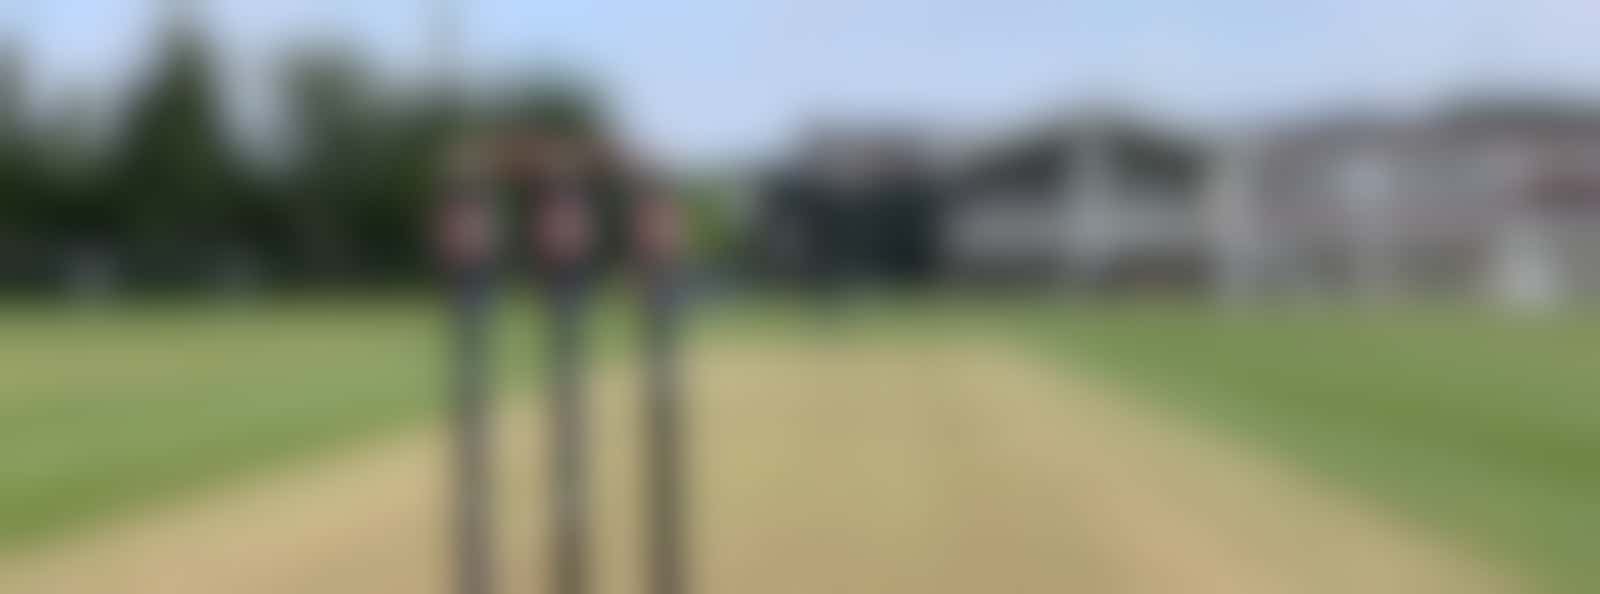 Salland Cricket Club